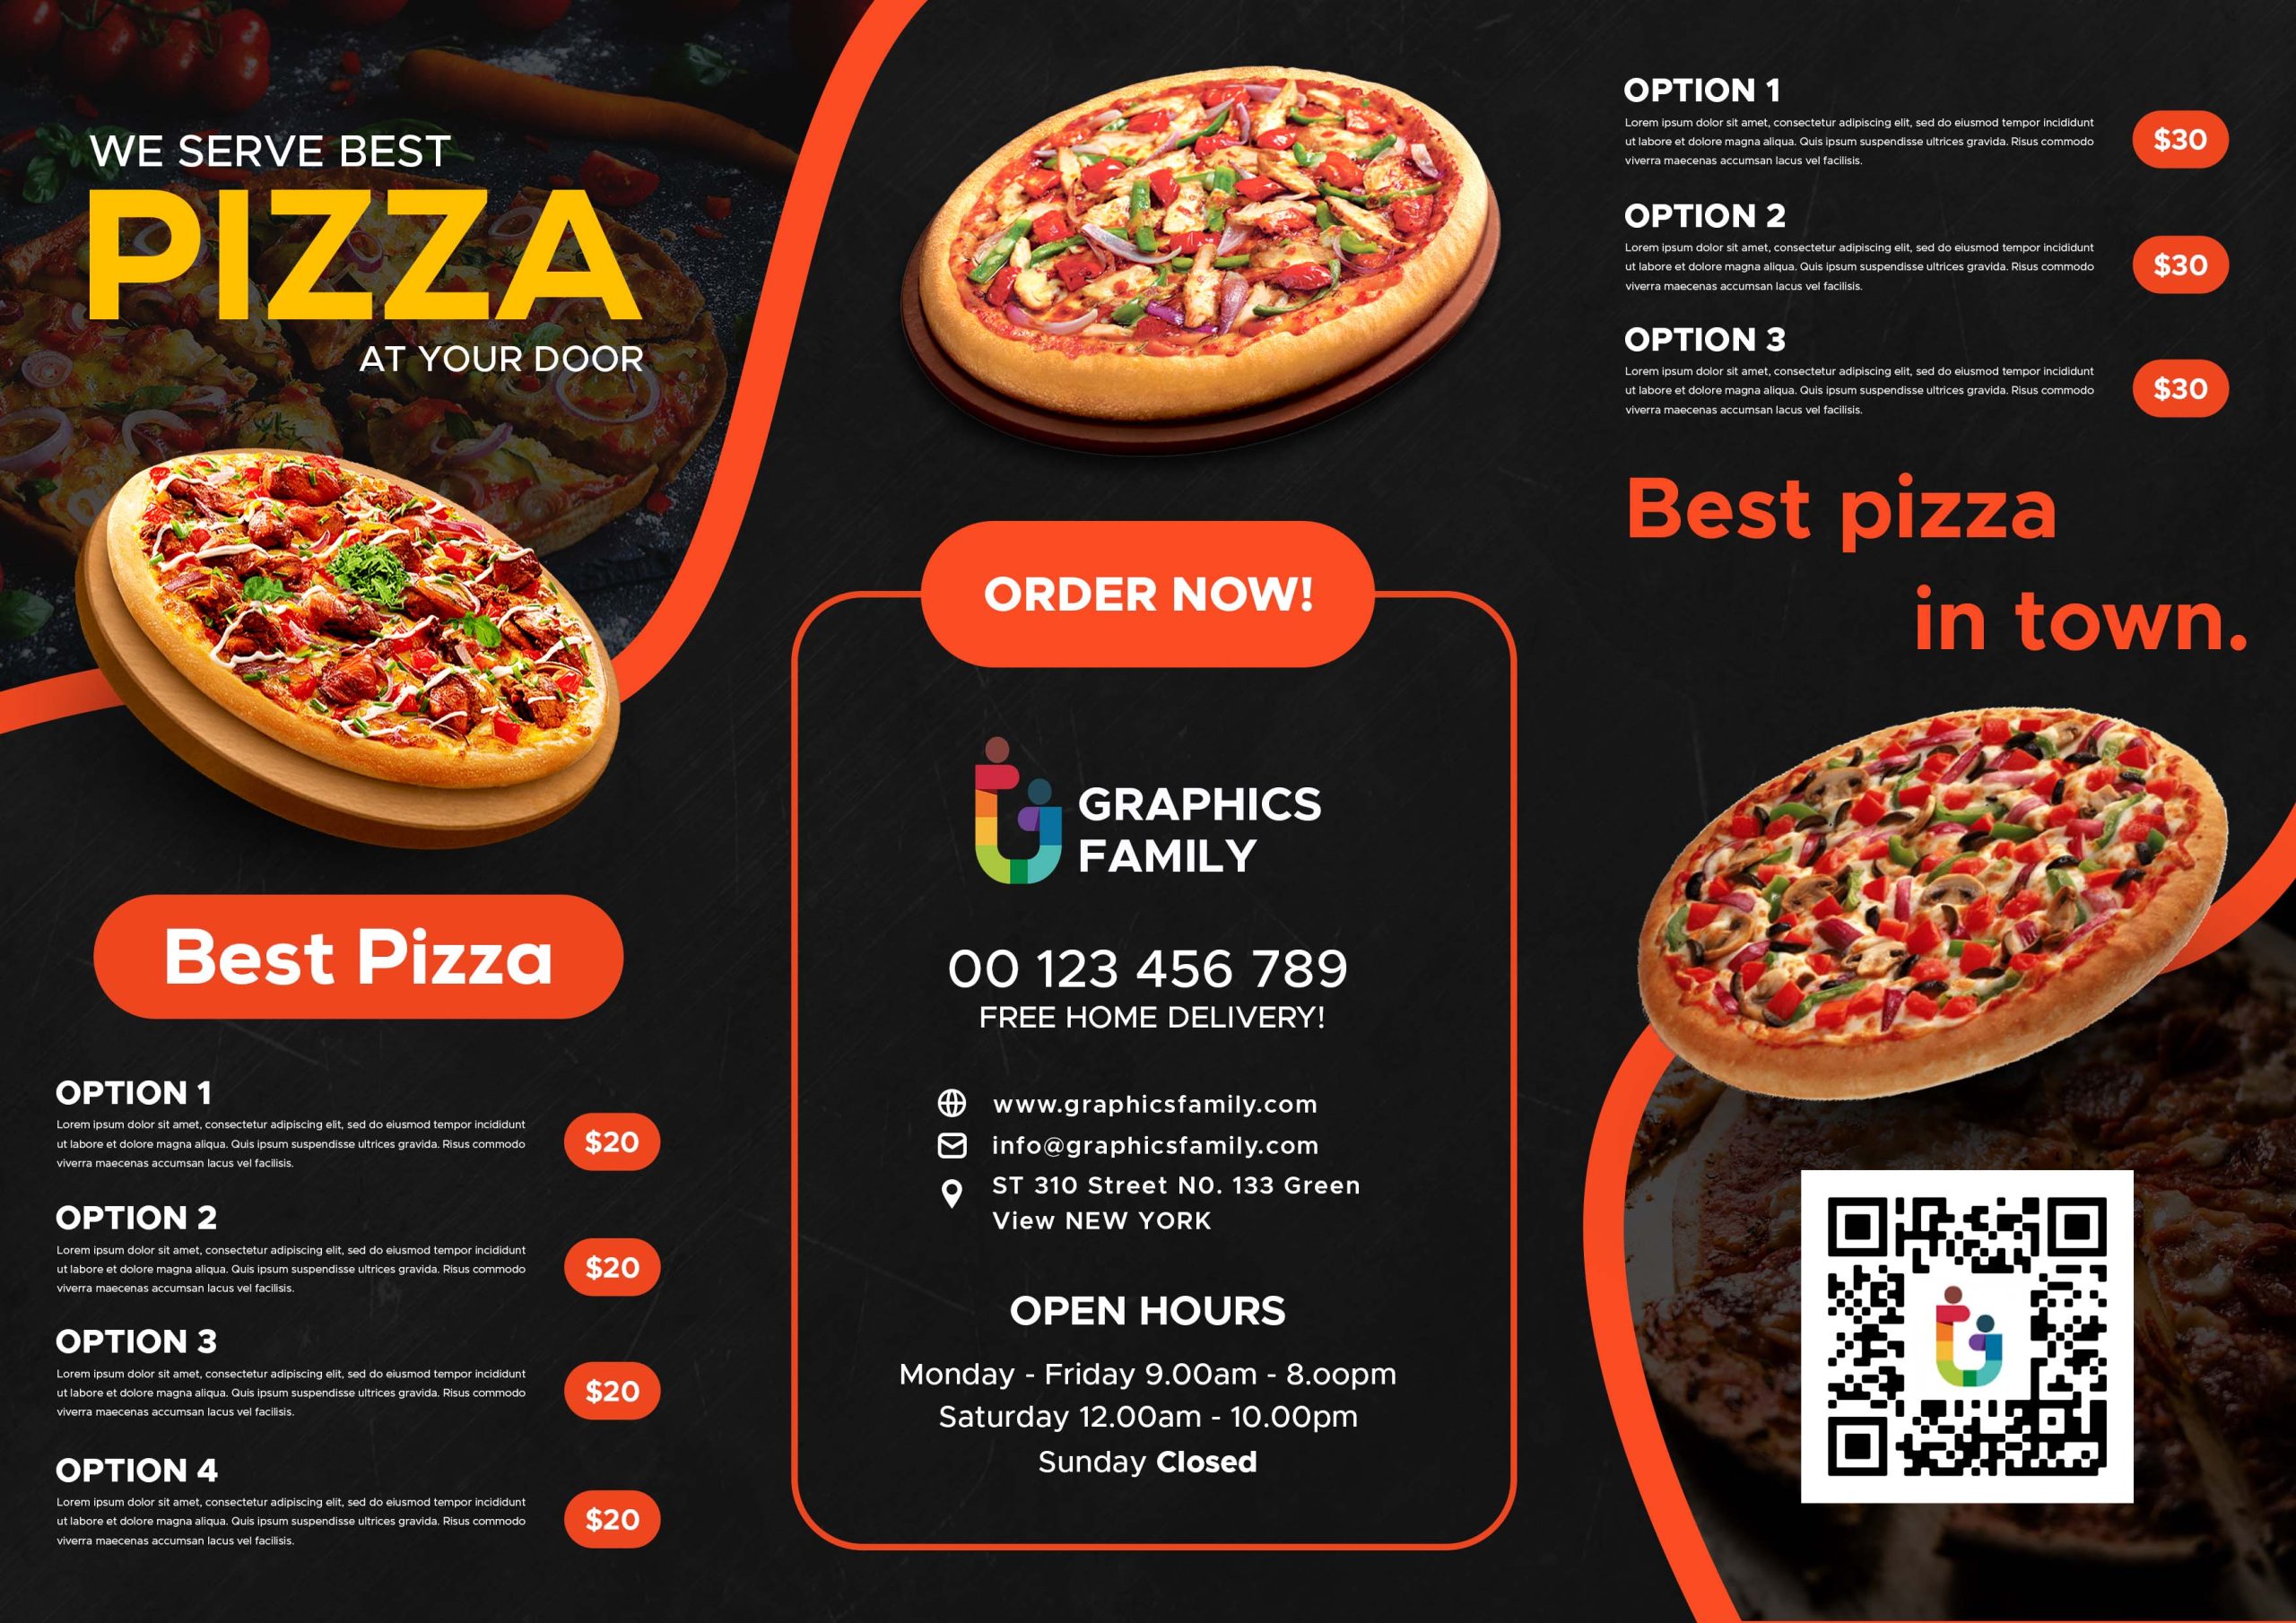 riverside-pizza-menu-offer-discounts-save-66-jlcatj-gob-mx